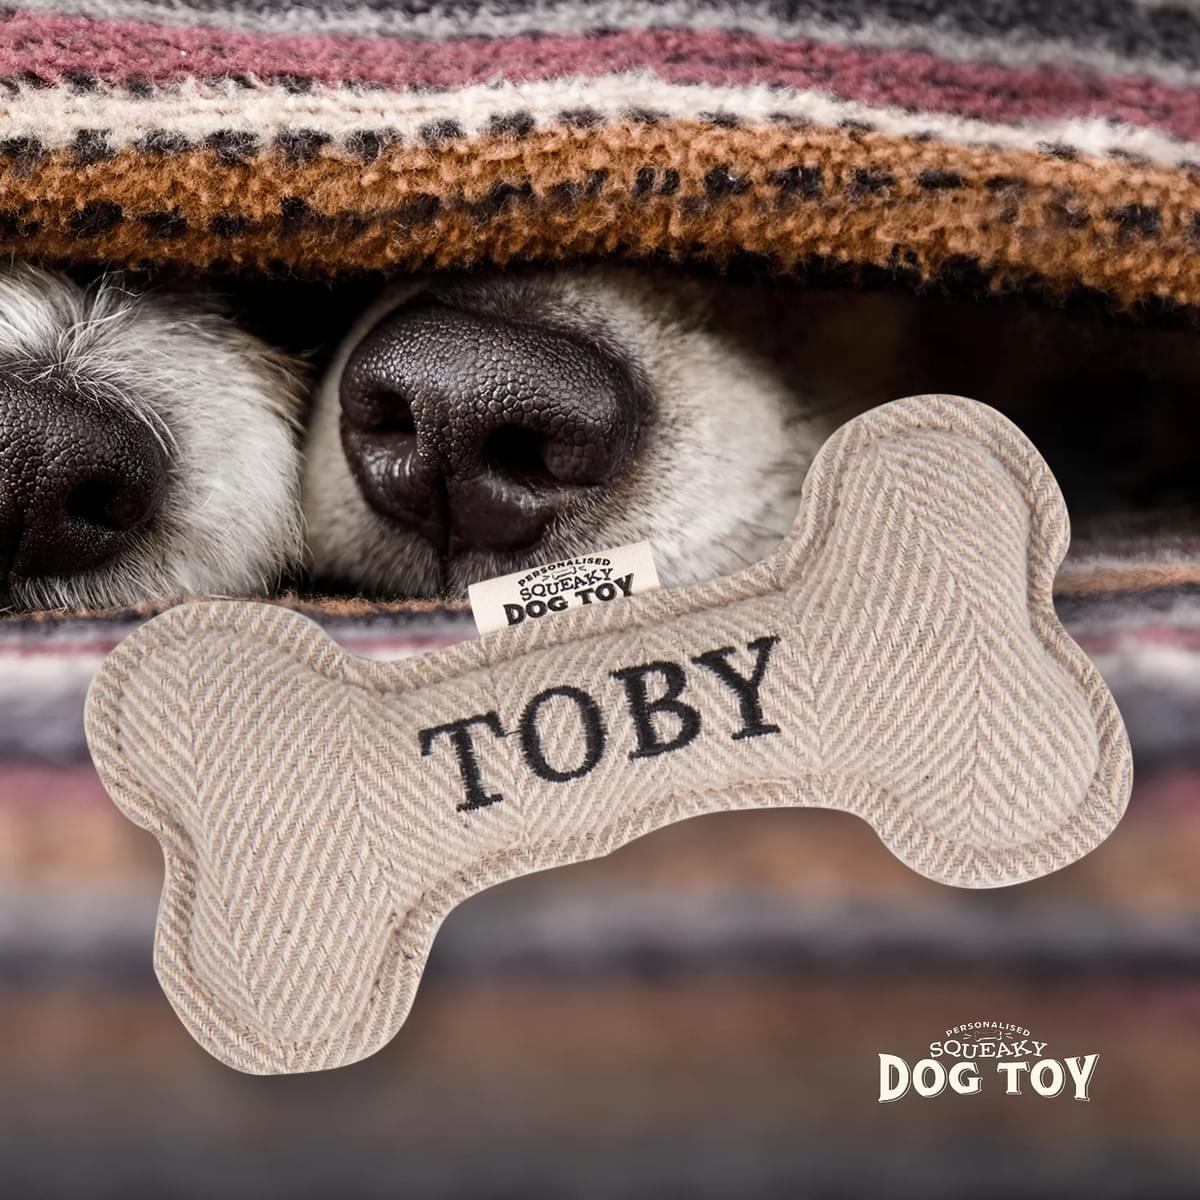 Named Squeaky Dog Toy- Toby. Bone shaped herringbone tweed pattern dog toy. 